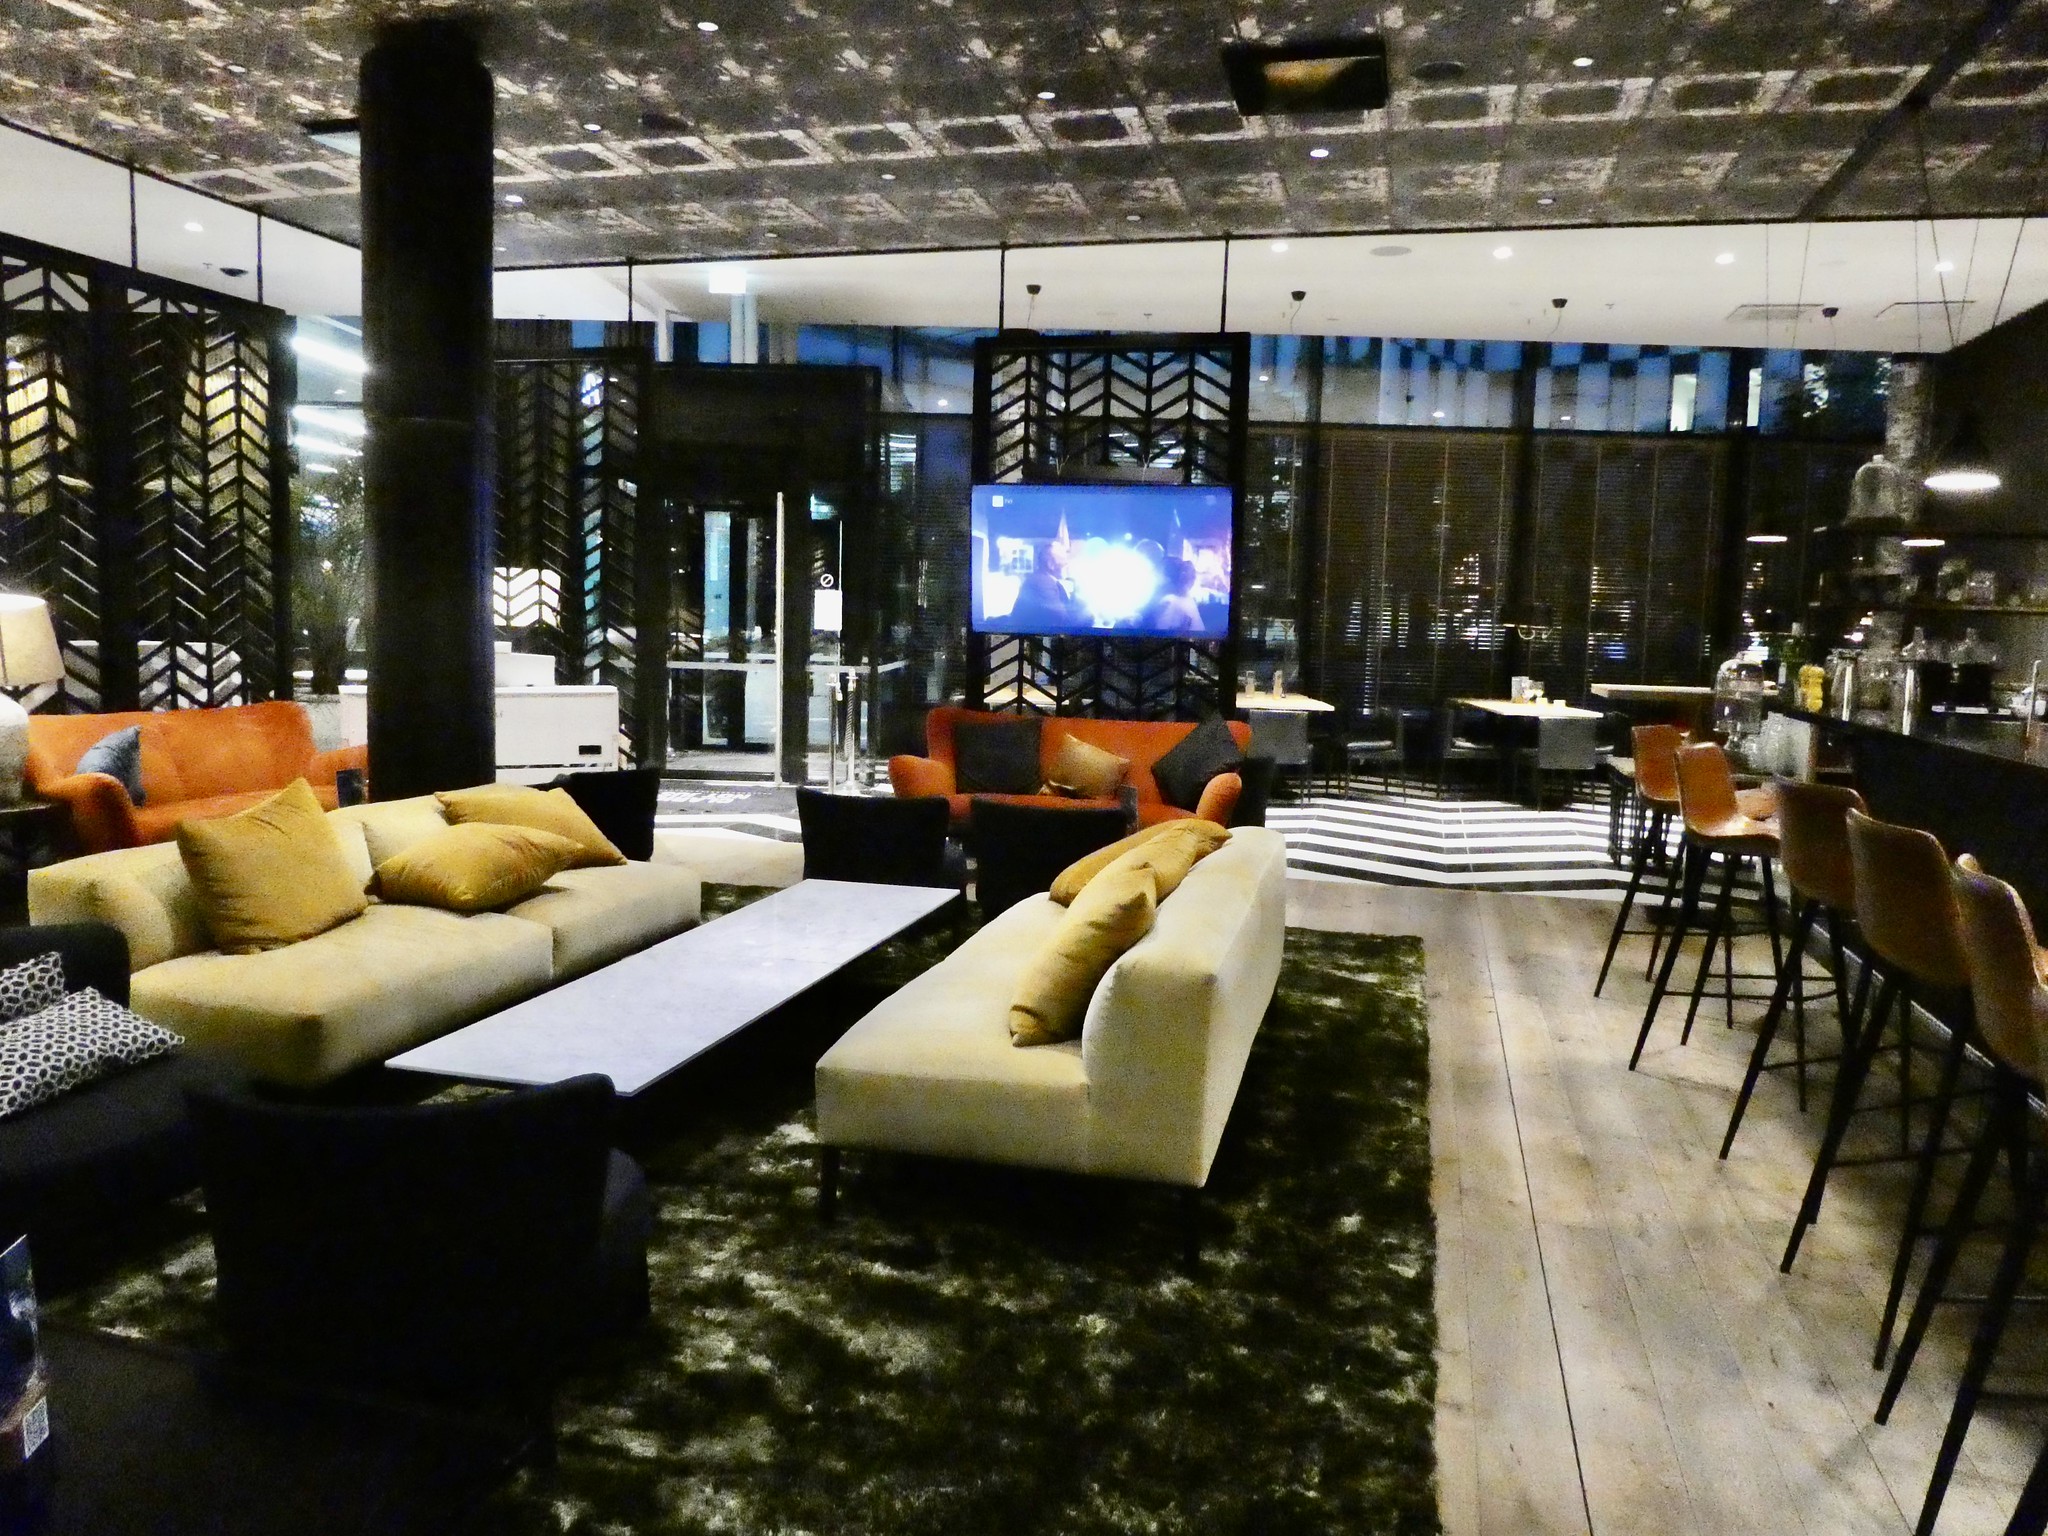 Hotel lobby bar and lounge, Clarion Hotel, Aviapolis, Helsinki Airport